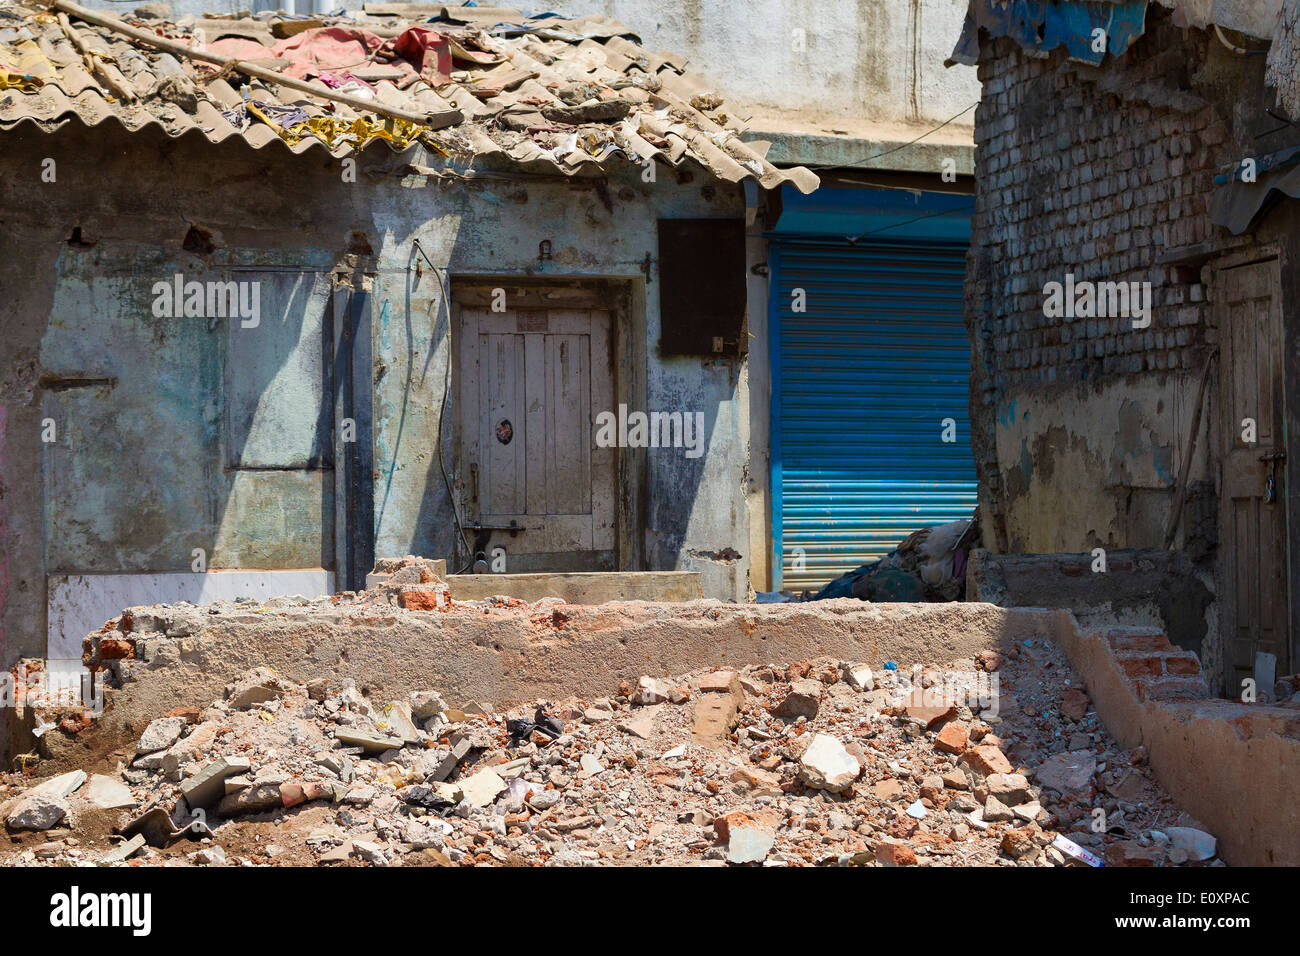 One Million people live in the 240 hectare Dharavi Slum, Mumbai India. Stock Photo